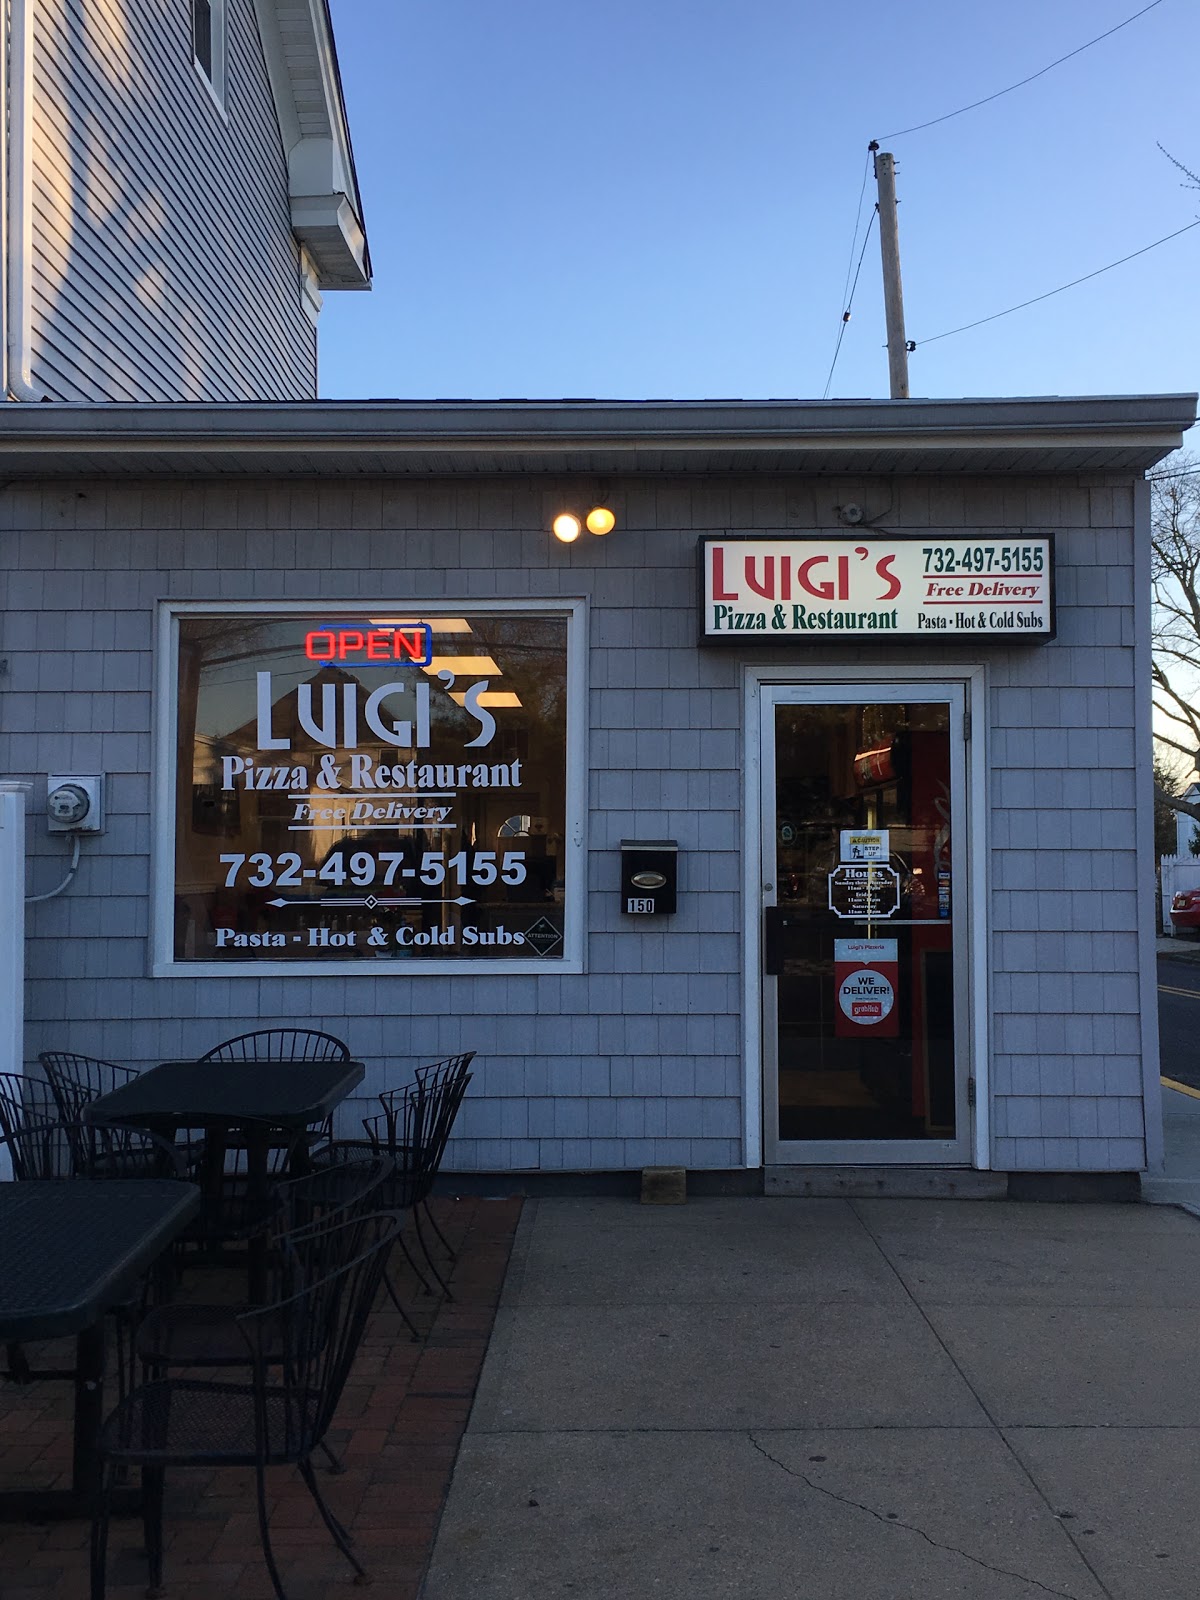 Photo of Luigi's Ristorante & Pizzeria in Keyport City, New Jersey, United States - 1 Picture of Restaurant, Food, Point of interest, Establishment